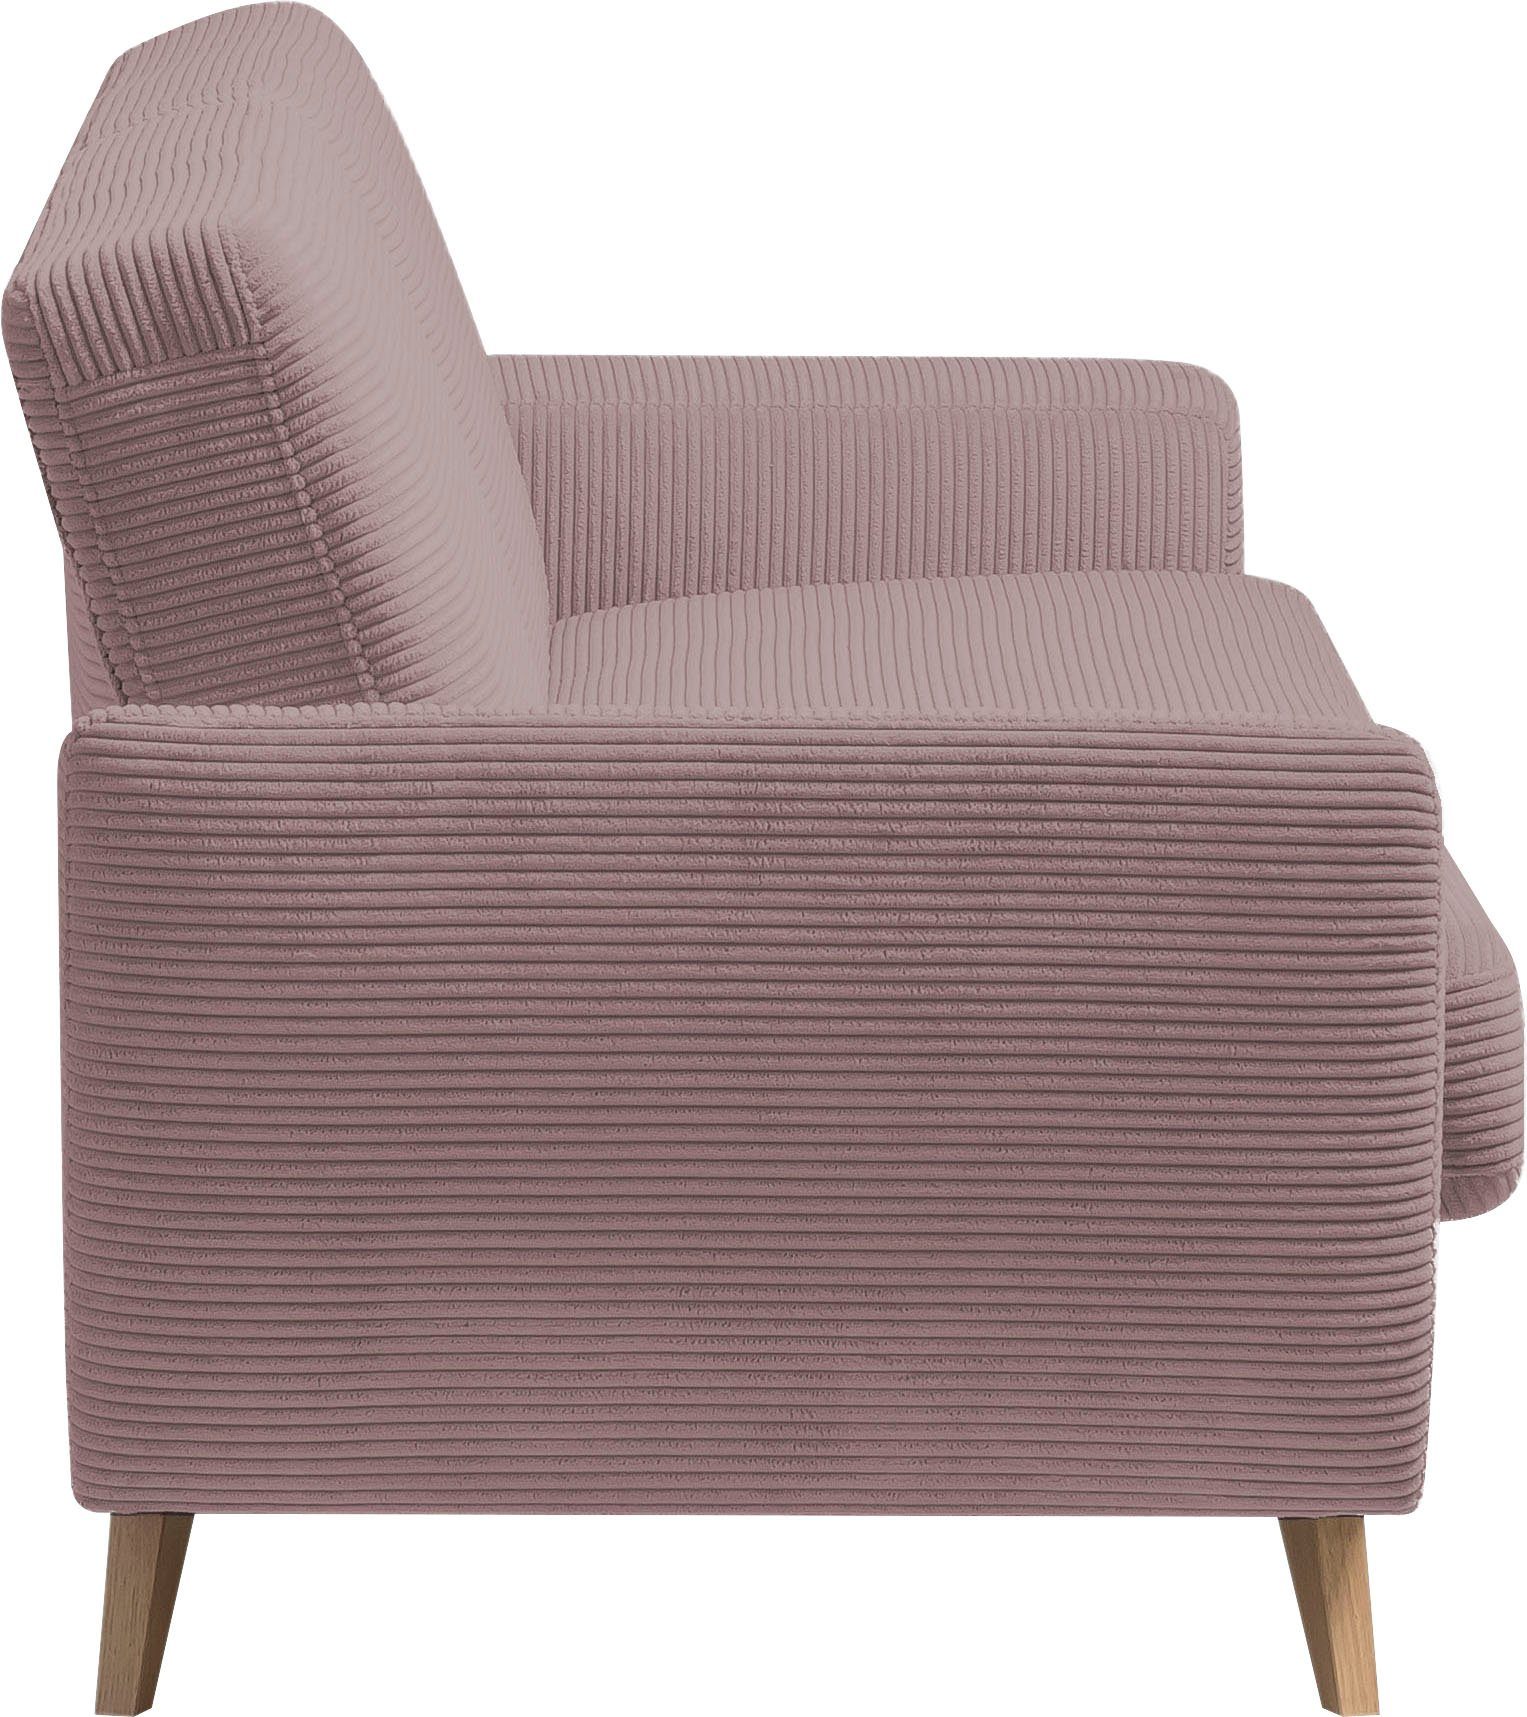 exxpo - sofa rose Inklusive Bettfunktion Bettkasten old und 3-Sitzer fashion Samso